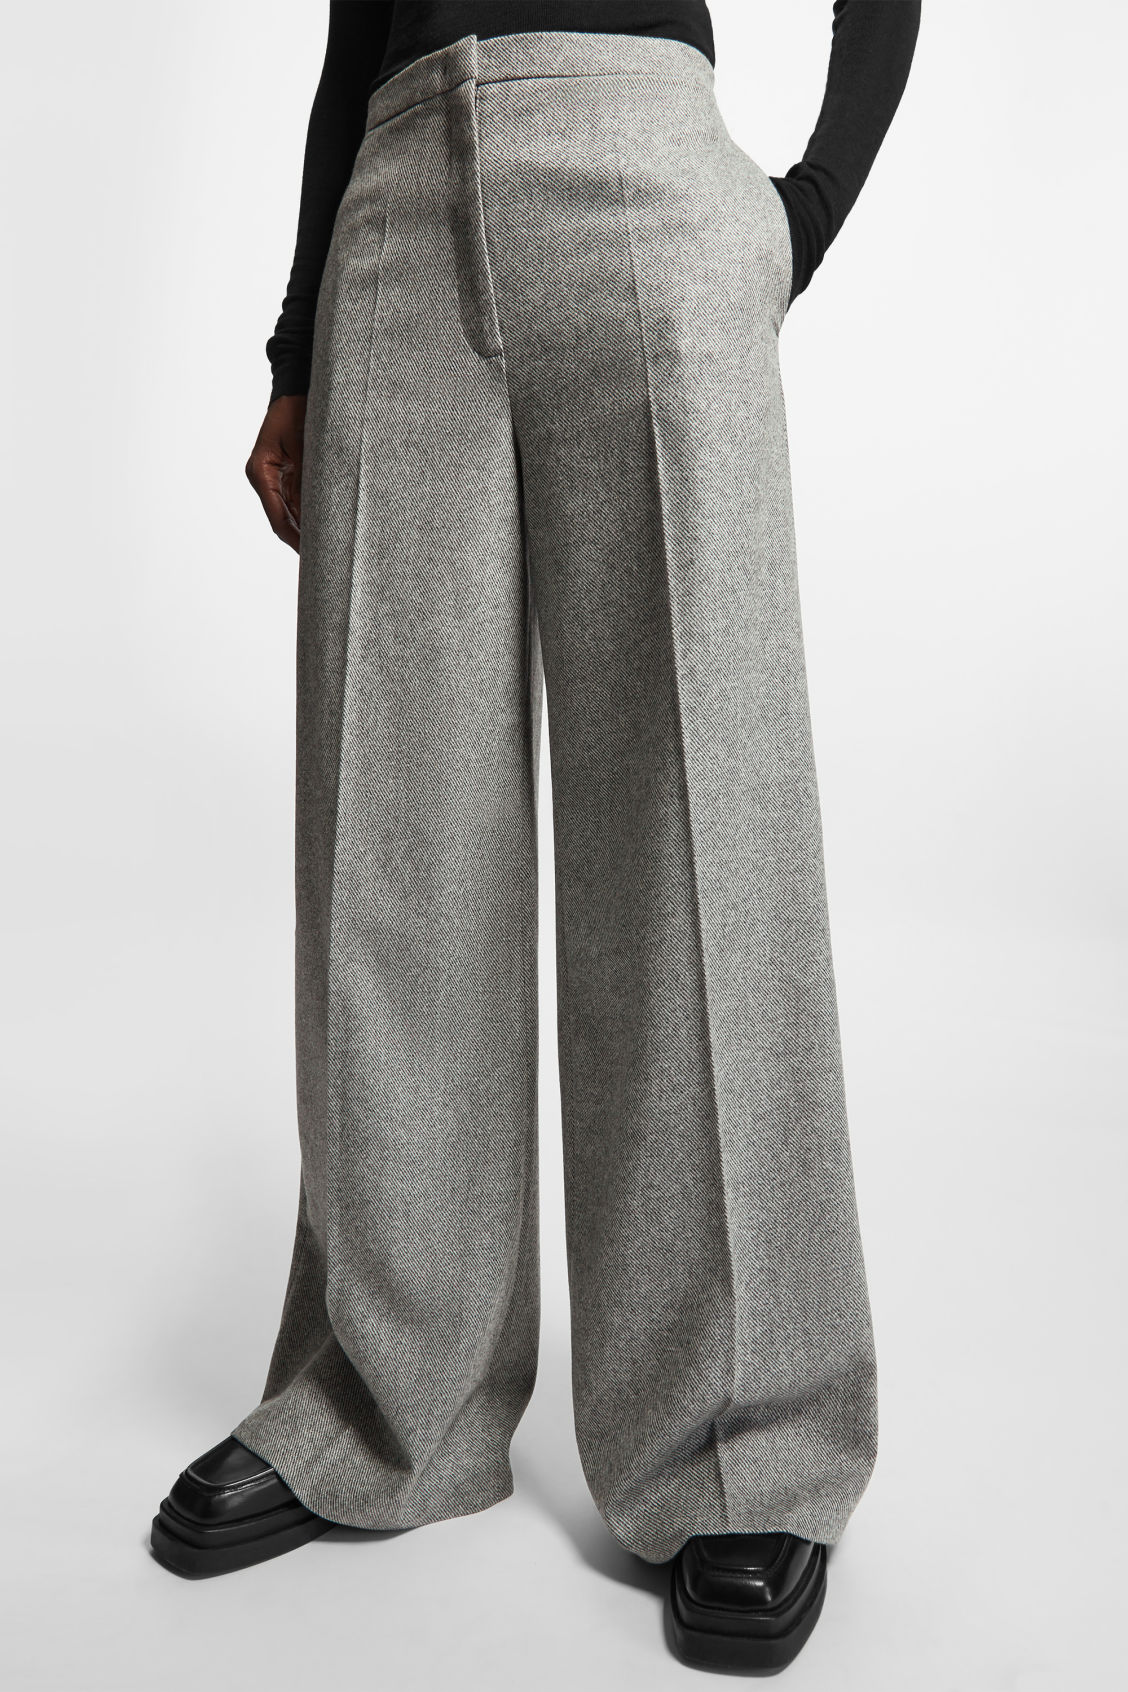 Buy Polo Ralph Lauren Women Tan Plaid WoolBlend Tweed WideLeg Pant Online   752087  The Collective